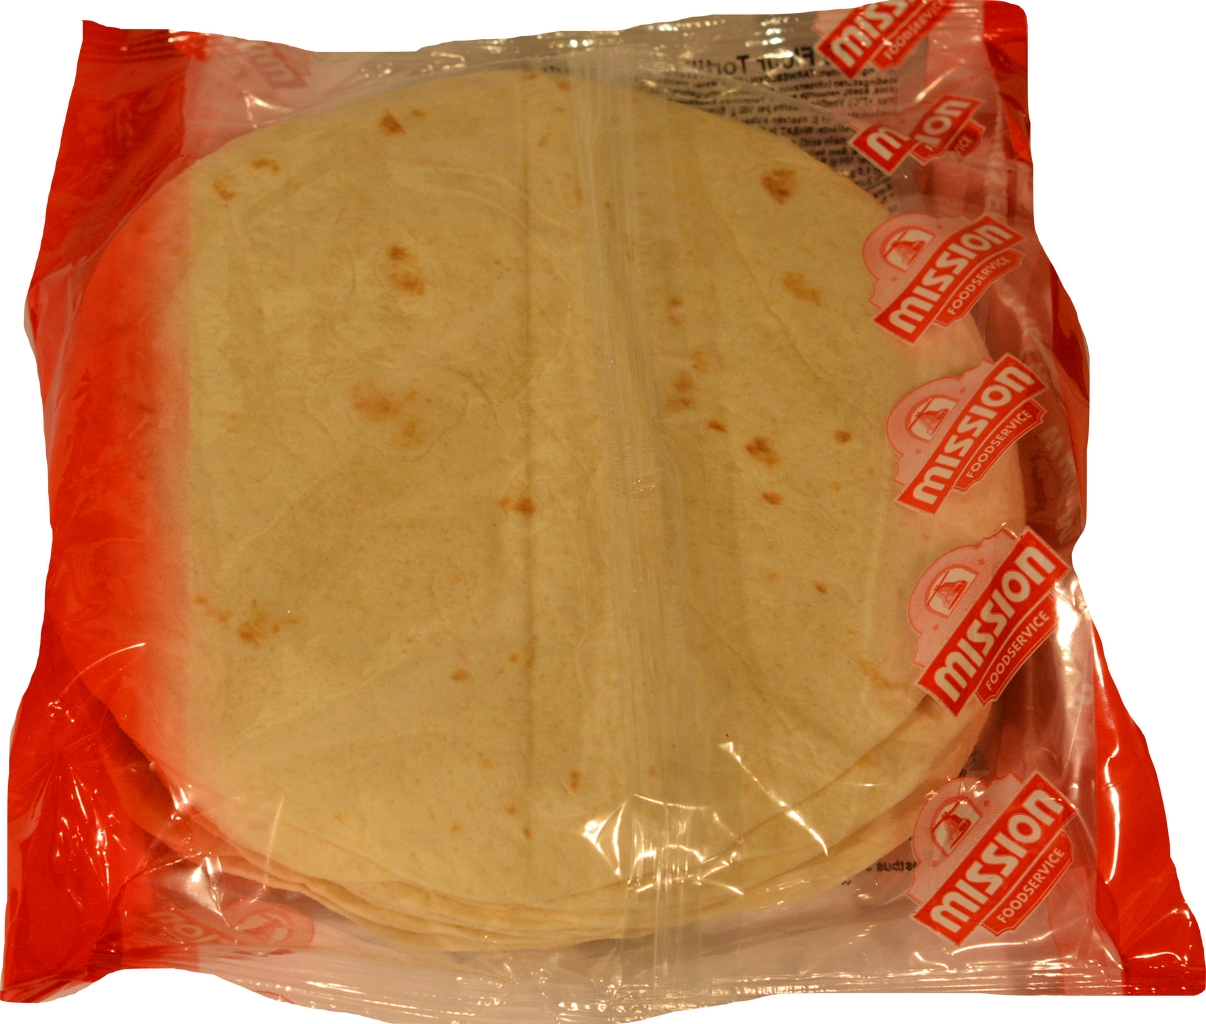 Meel Tortillas - La Canasta - Mexican food and products